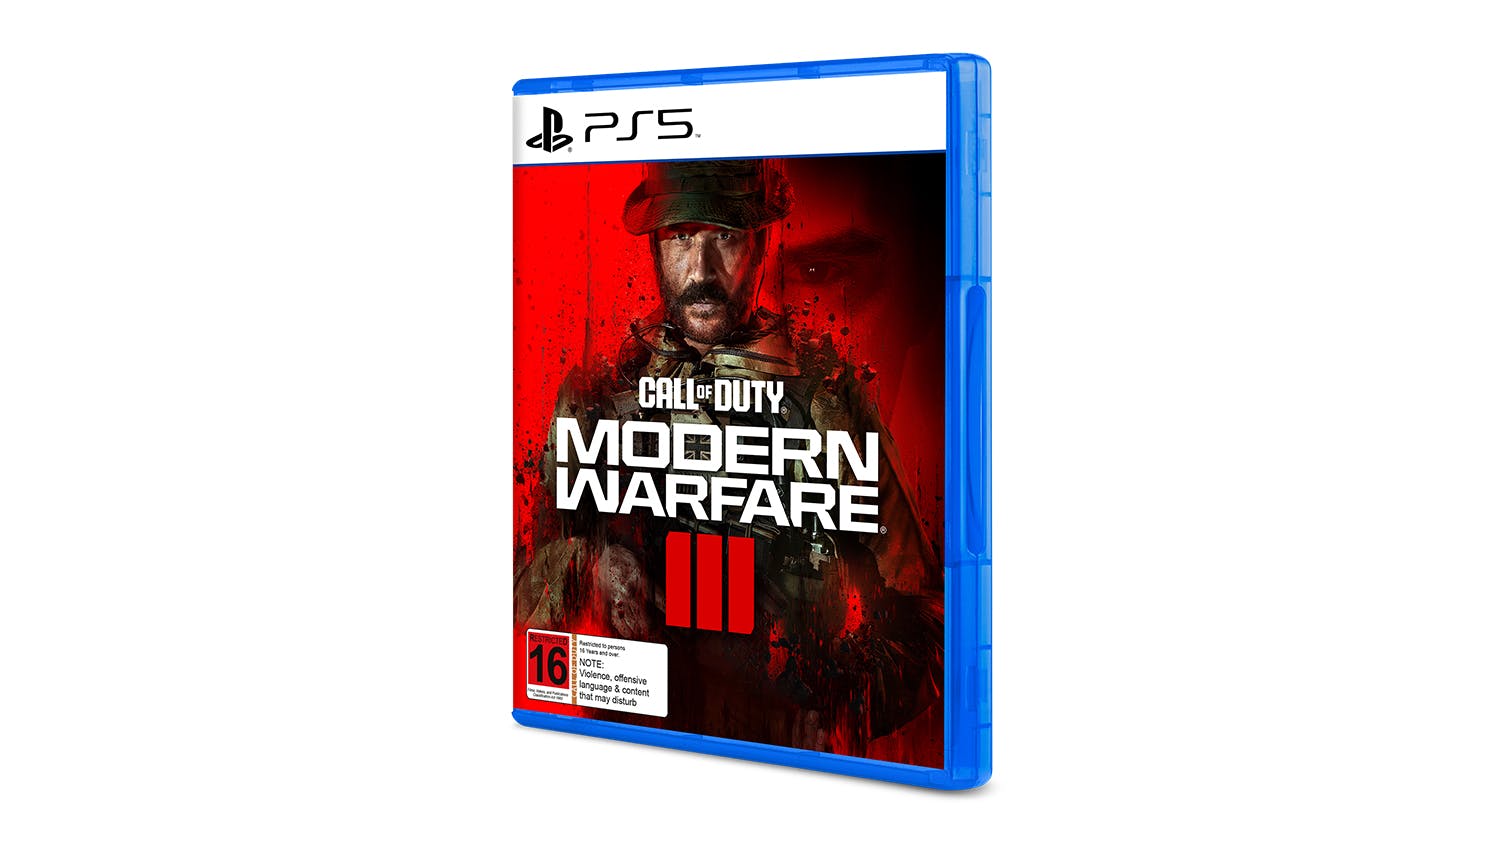 PS5 - Call of Duty: Modern Warfare 3 (R16)